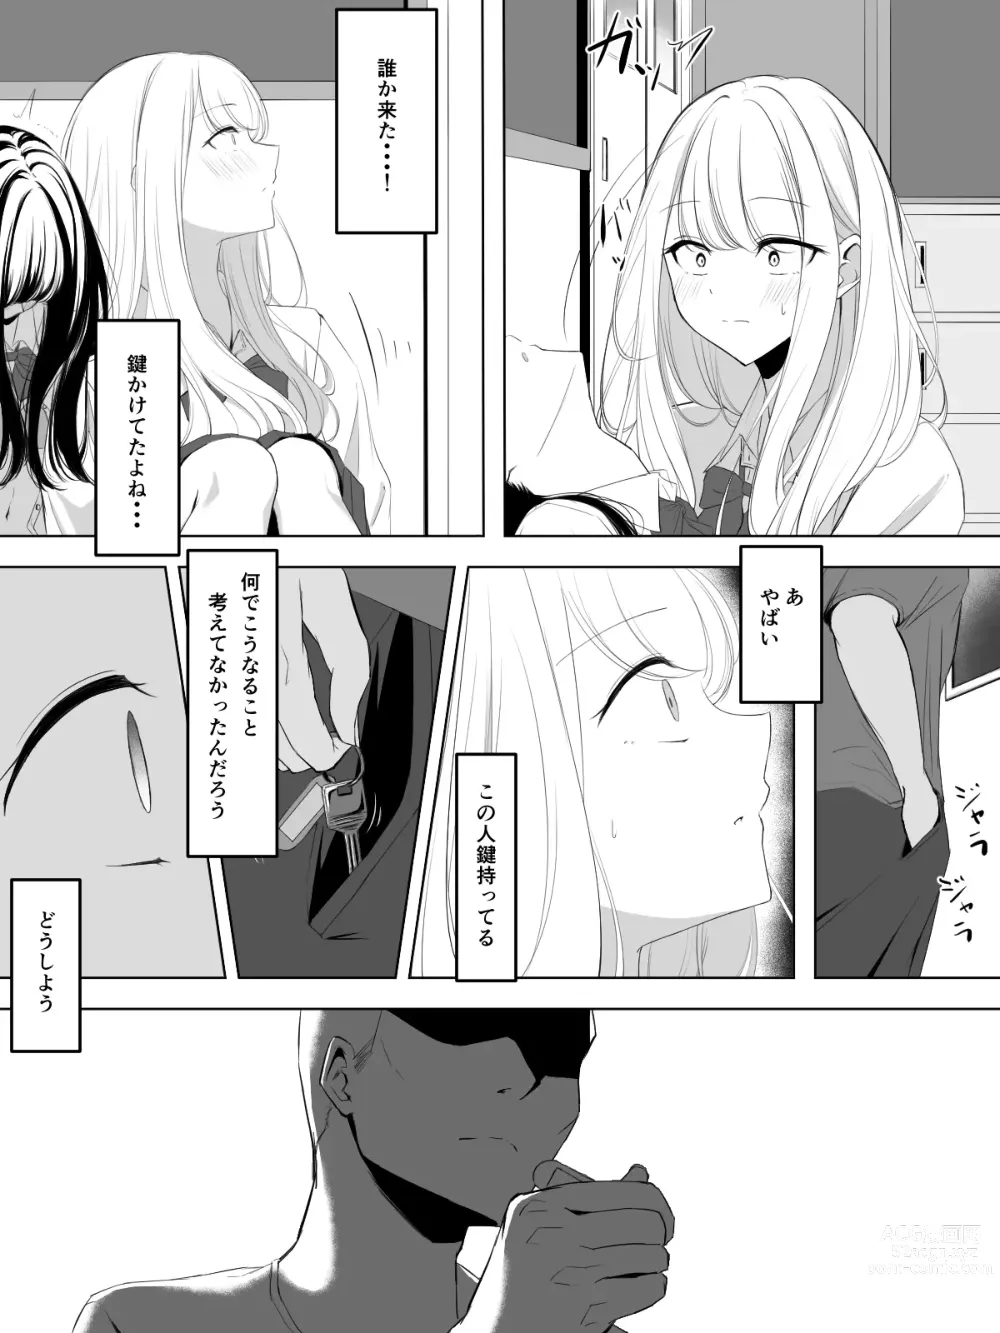 Page 17 of doujinshi Yuri comic Part 1,2 and 3.